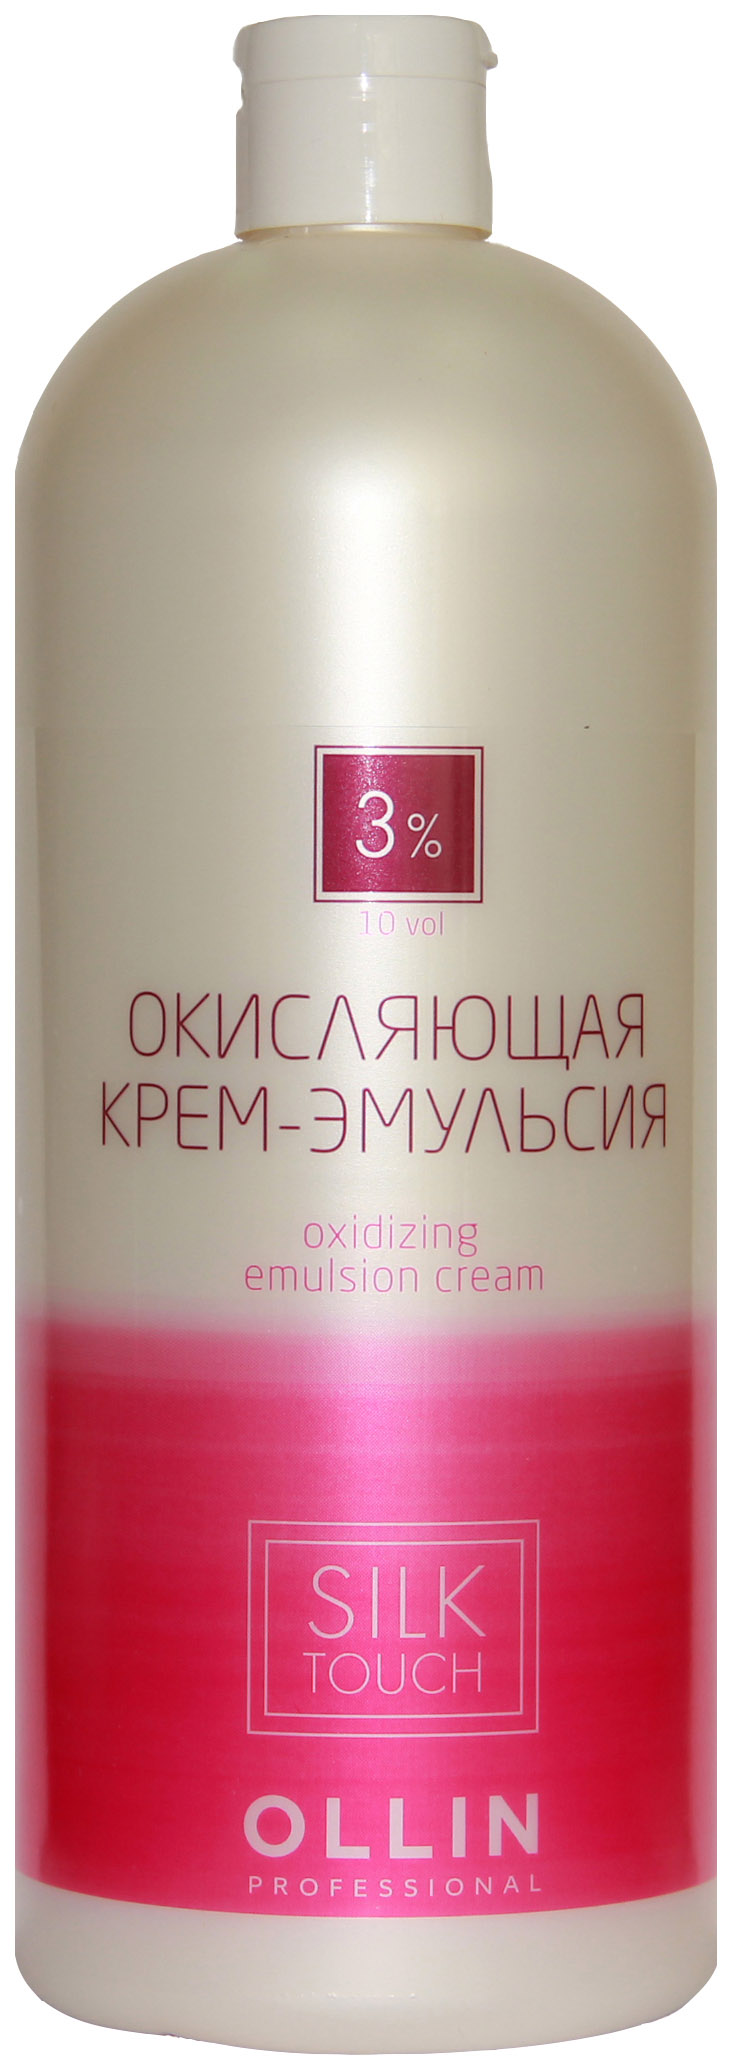 Проявитель Ollin Professional Silk Touch 3% 1000 мл проявитель indola professional cream developer 30 vol 9% 1000 мл